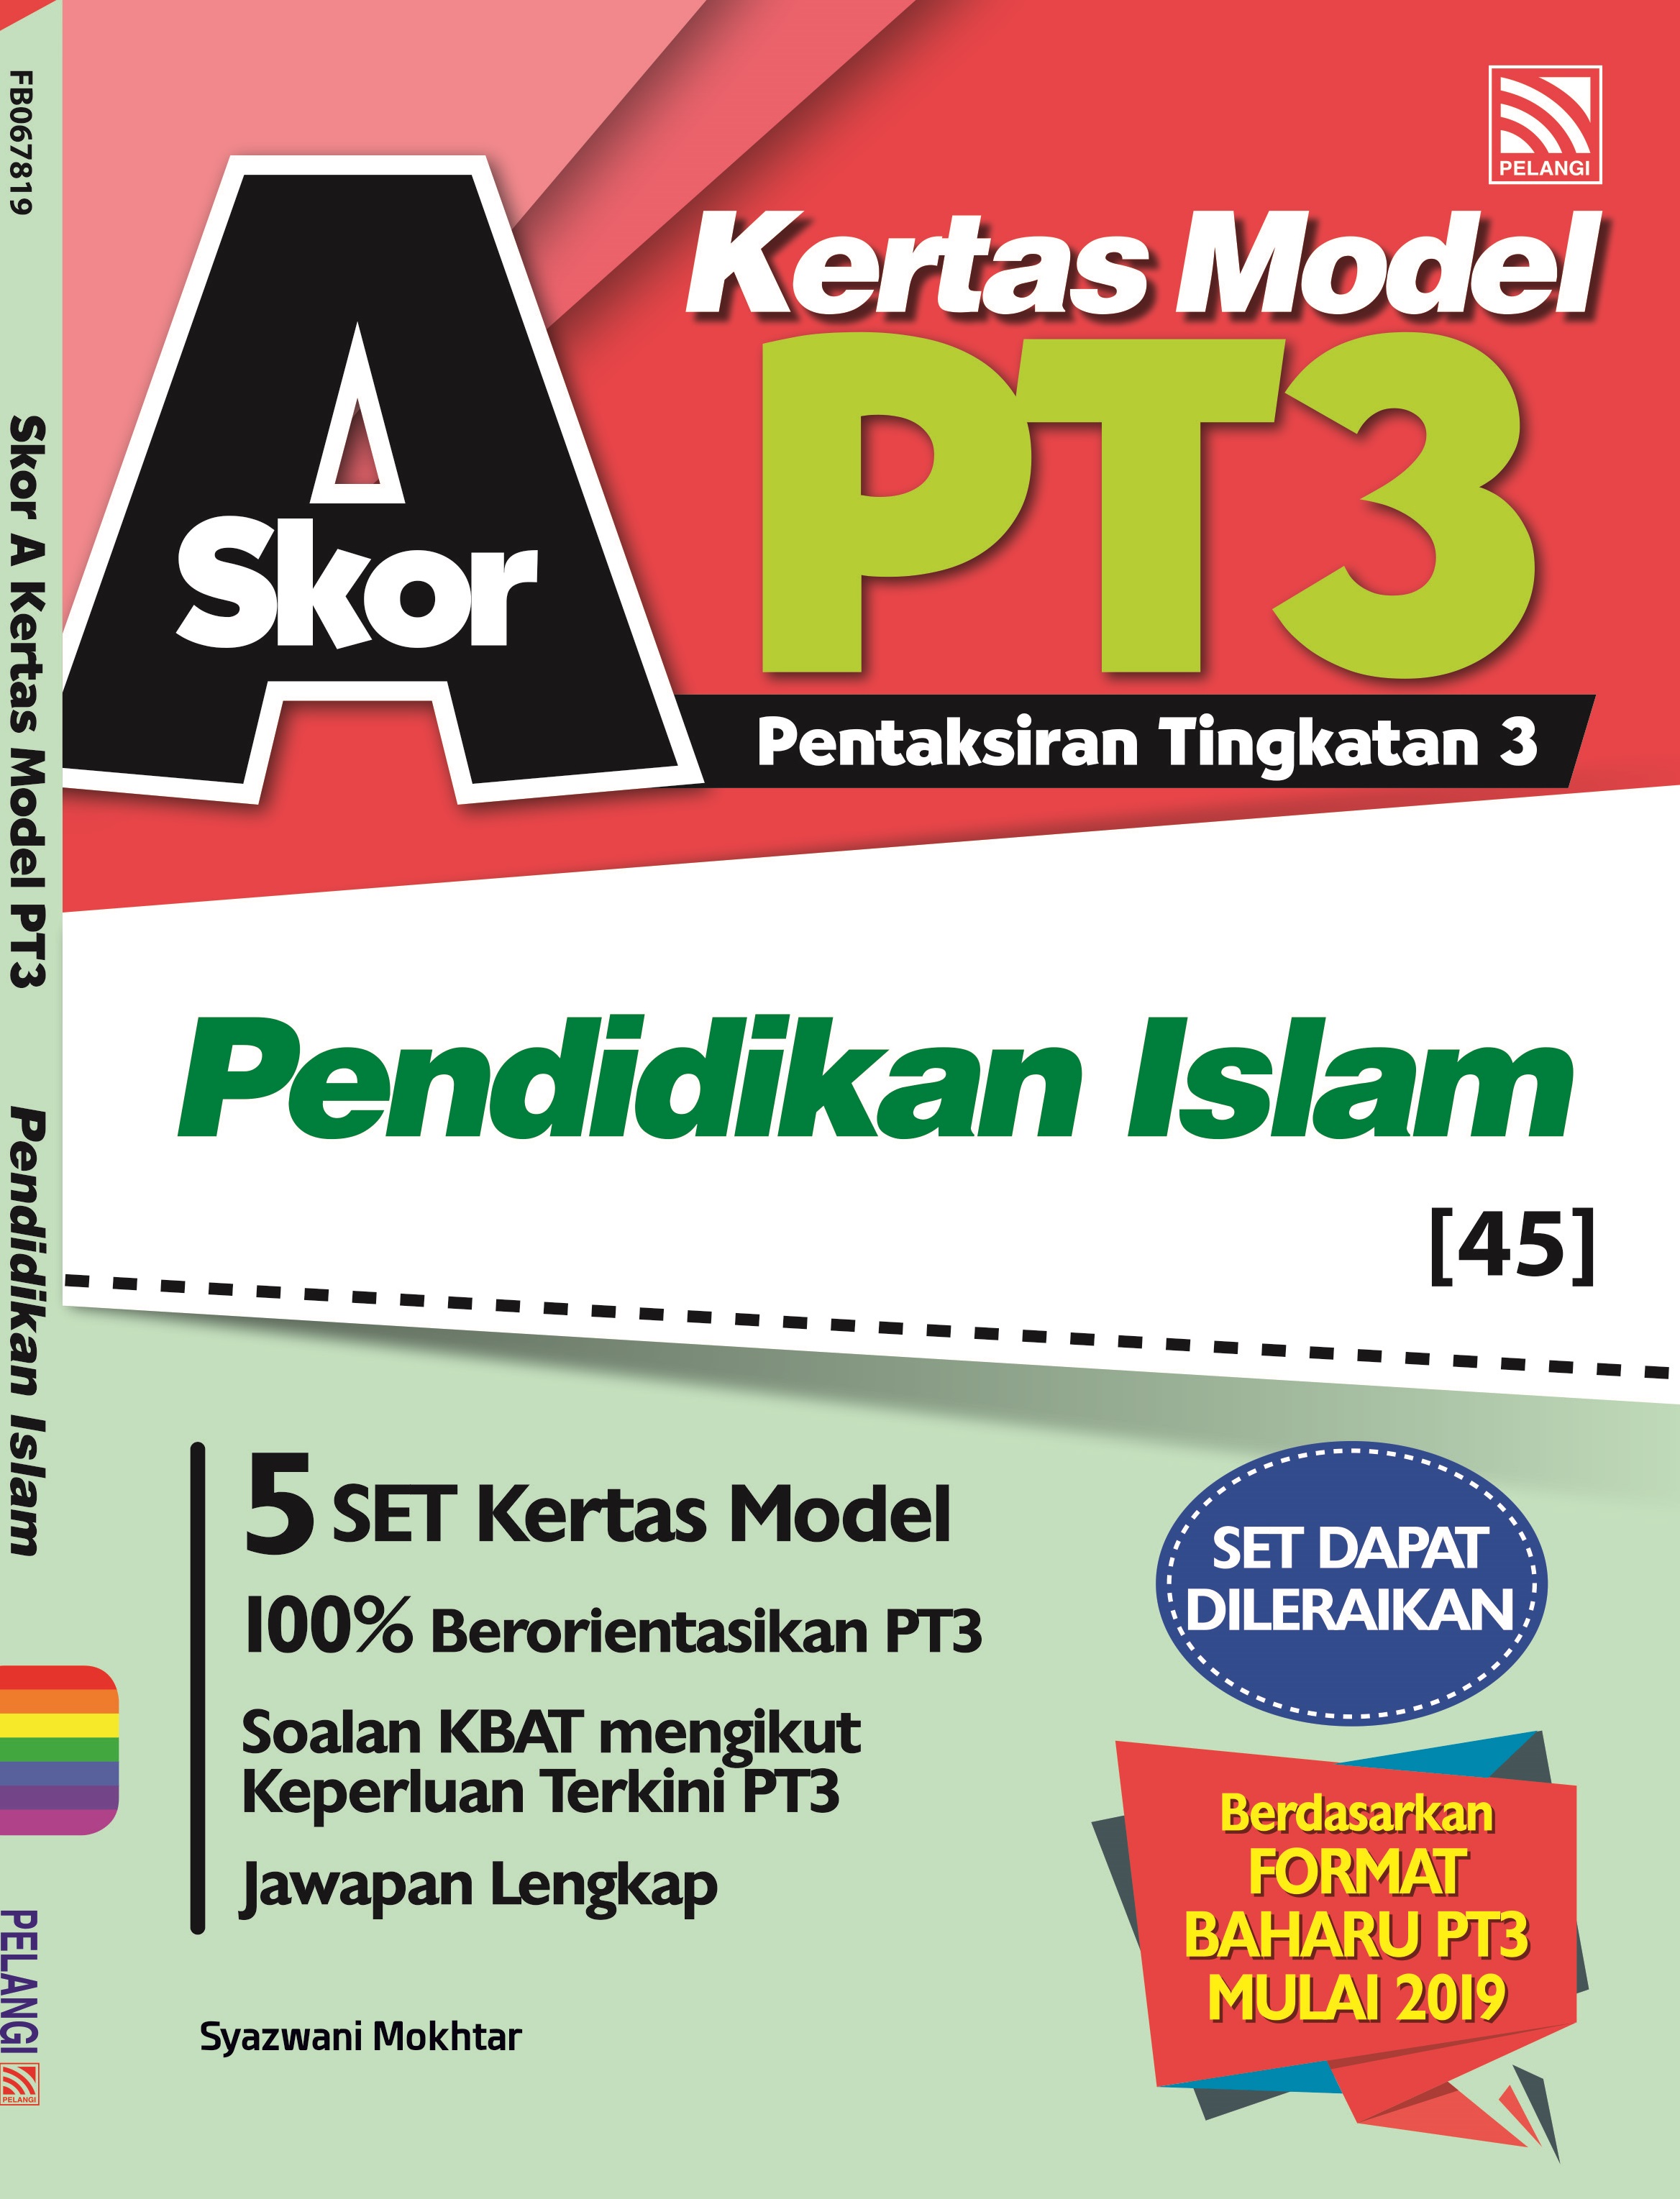 Skor A Kertas Model Pt3 2019 Pendidikan Islam